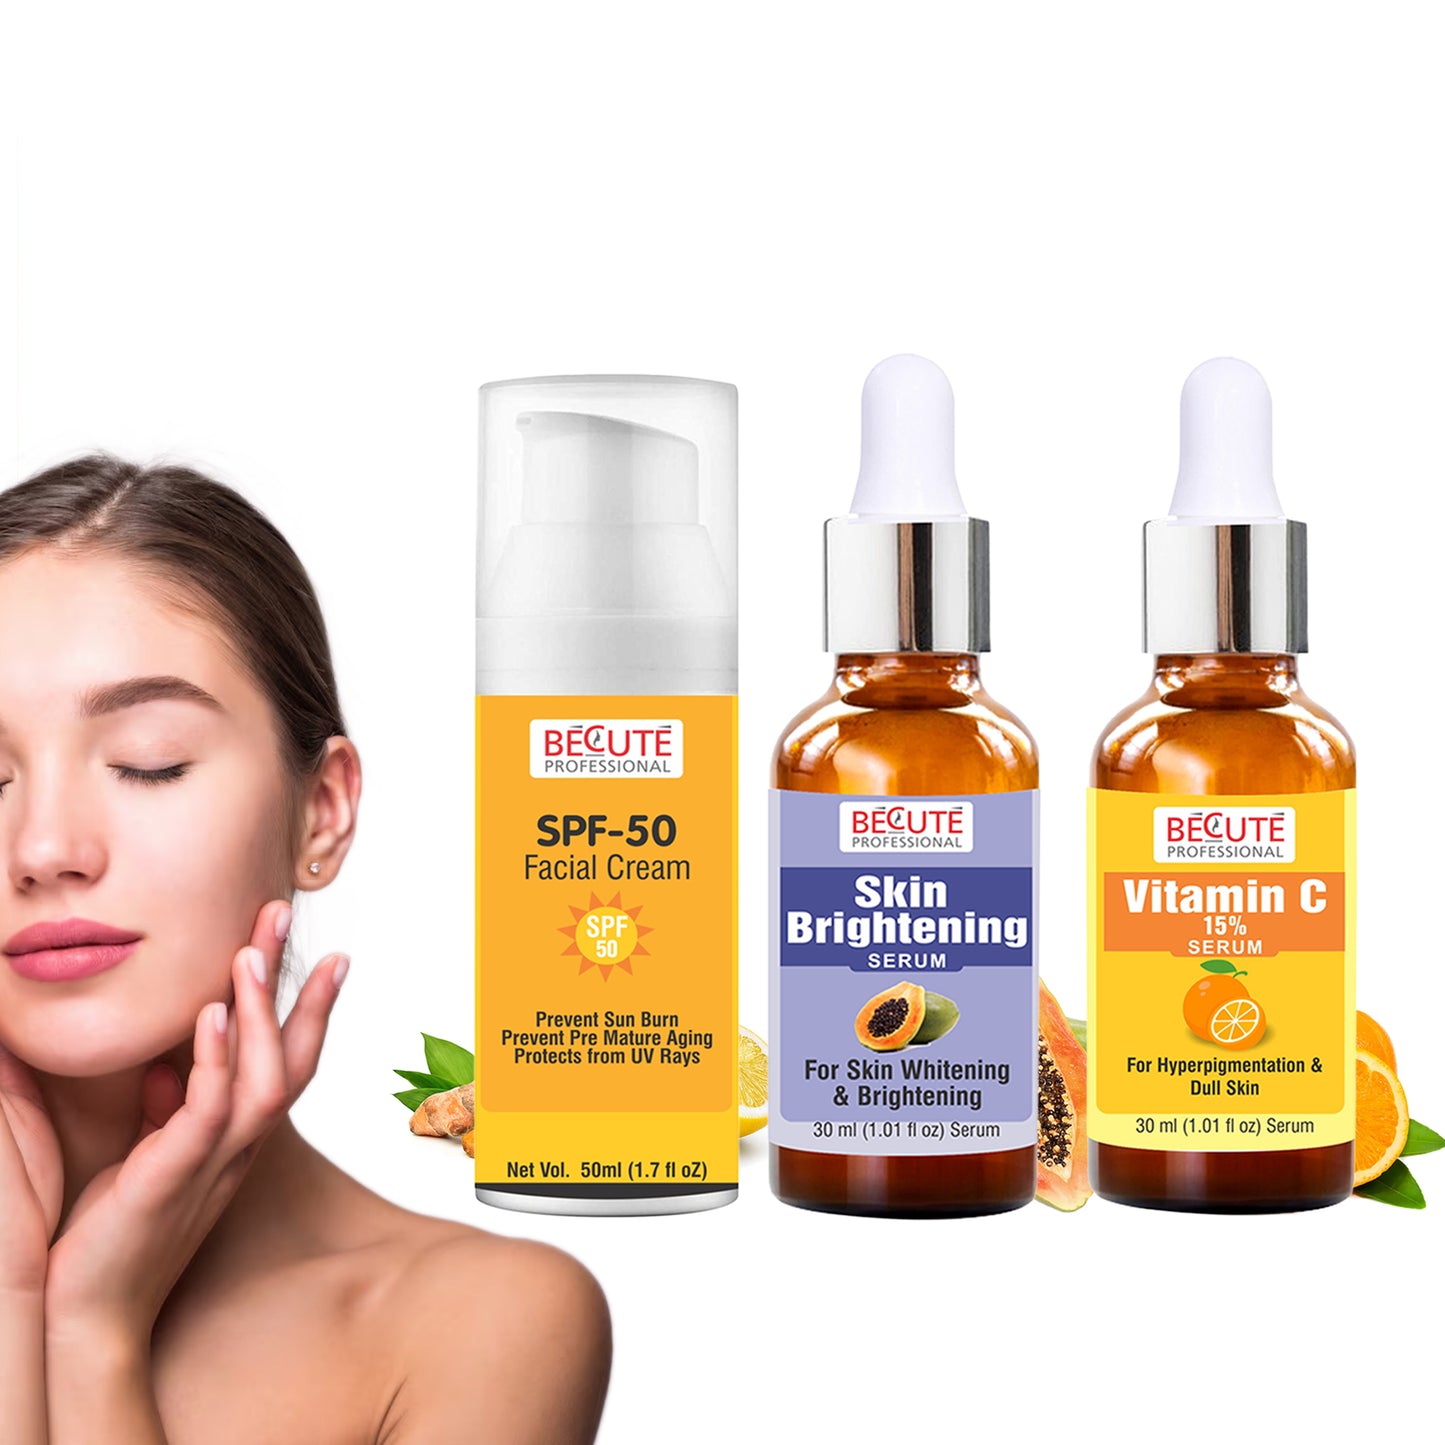 BECUTE Professional® SPF 50 Facial Cream+Skin Brightening Serum+Vitamin C Face Serum - Combo Pack, 110 mL